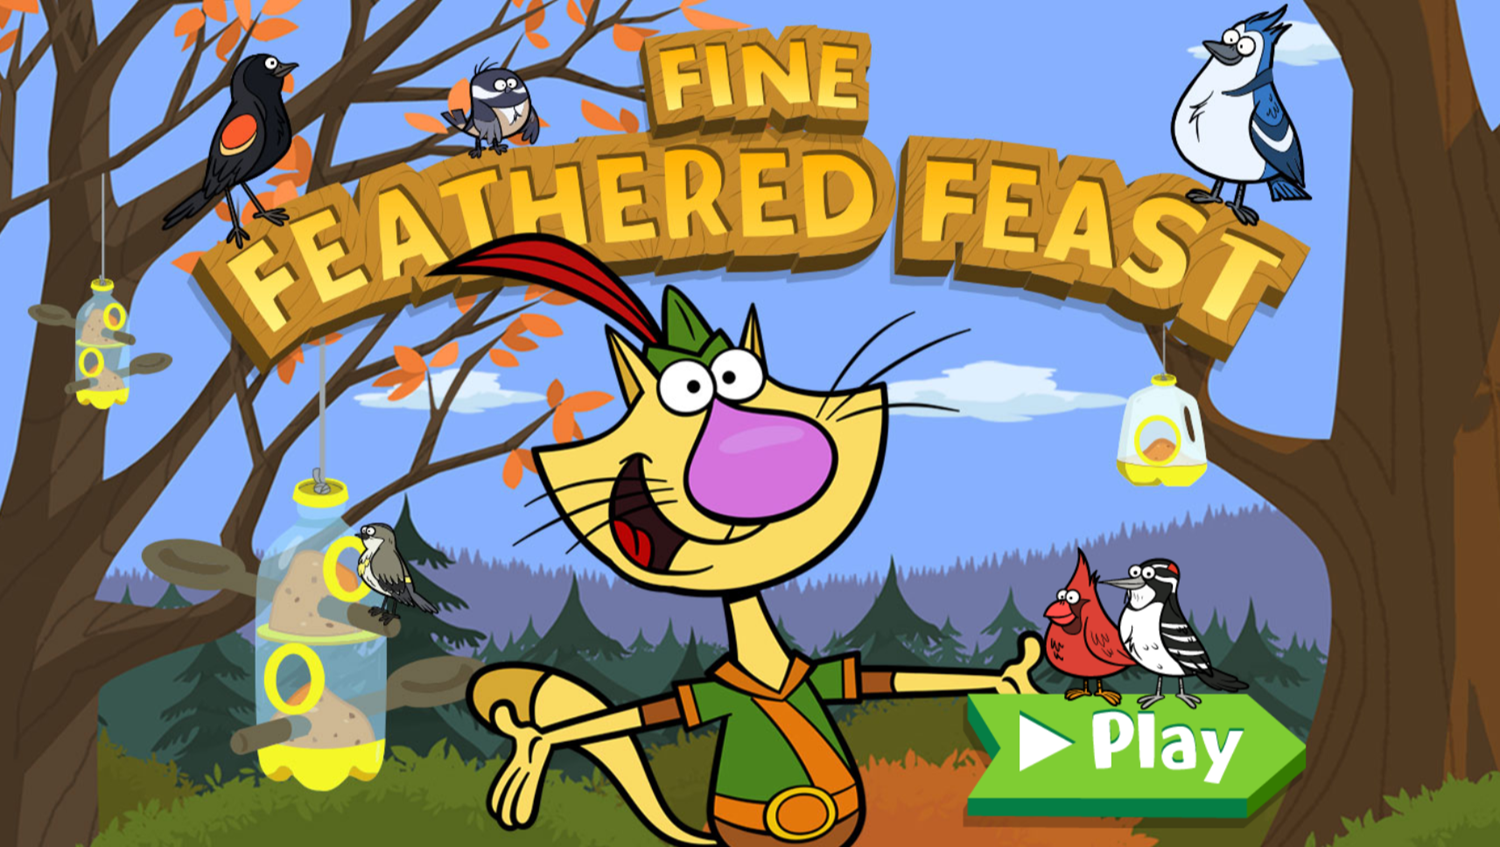 Nature Cat Fine Feathered Feast Game Welcome Screen Screenshot.